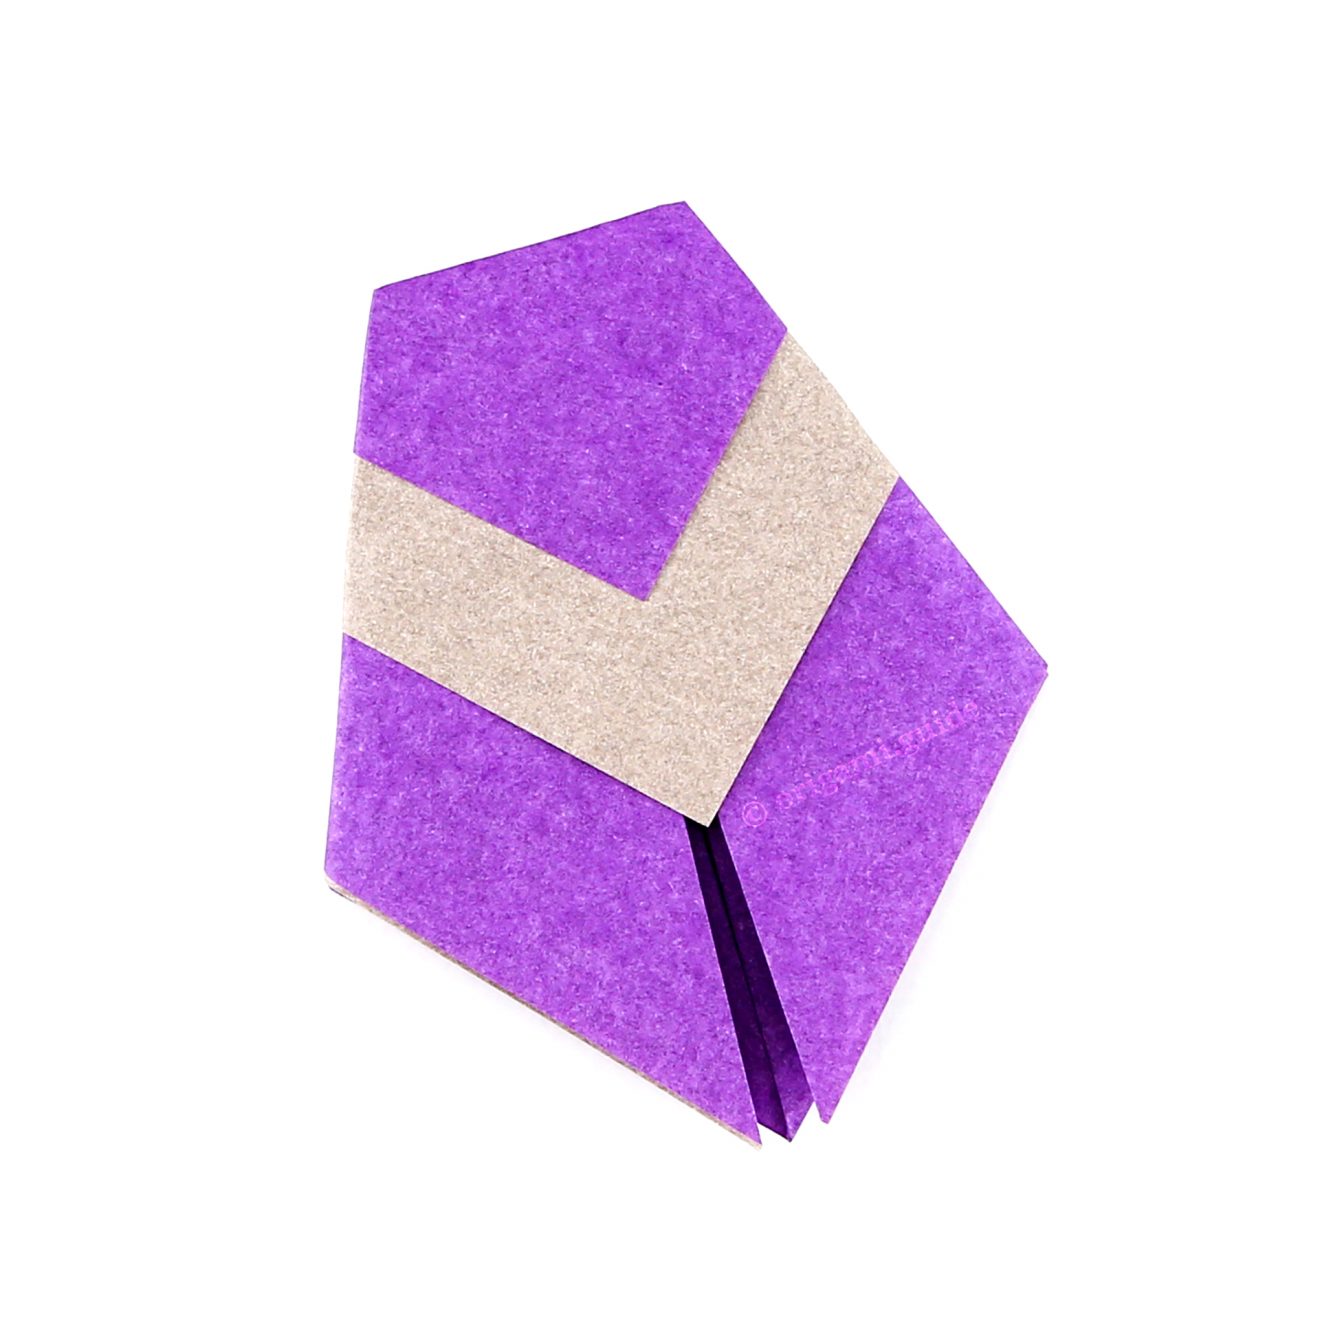 traditional origami cicada tutorial 00 1